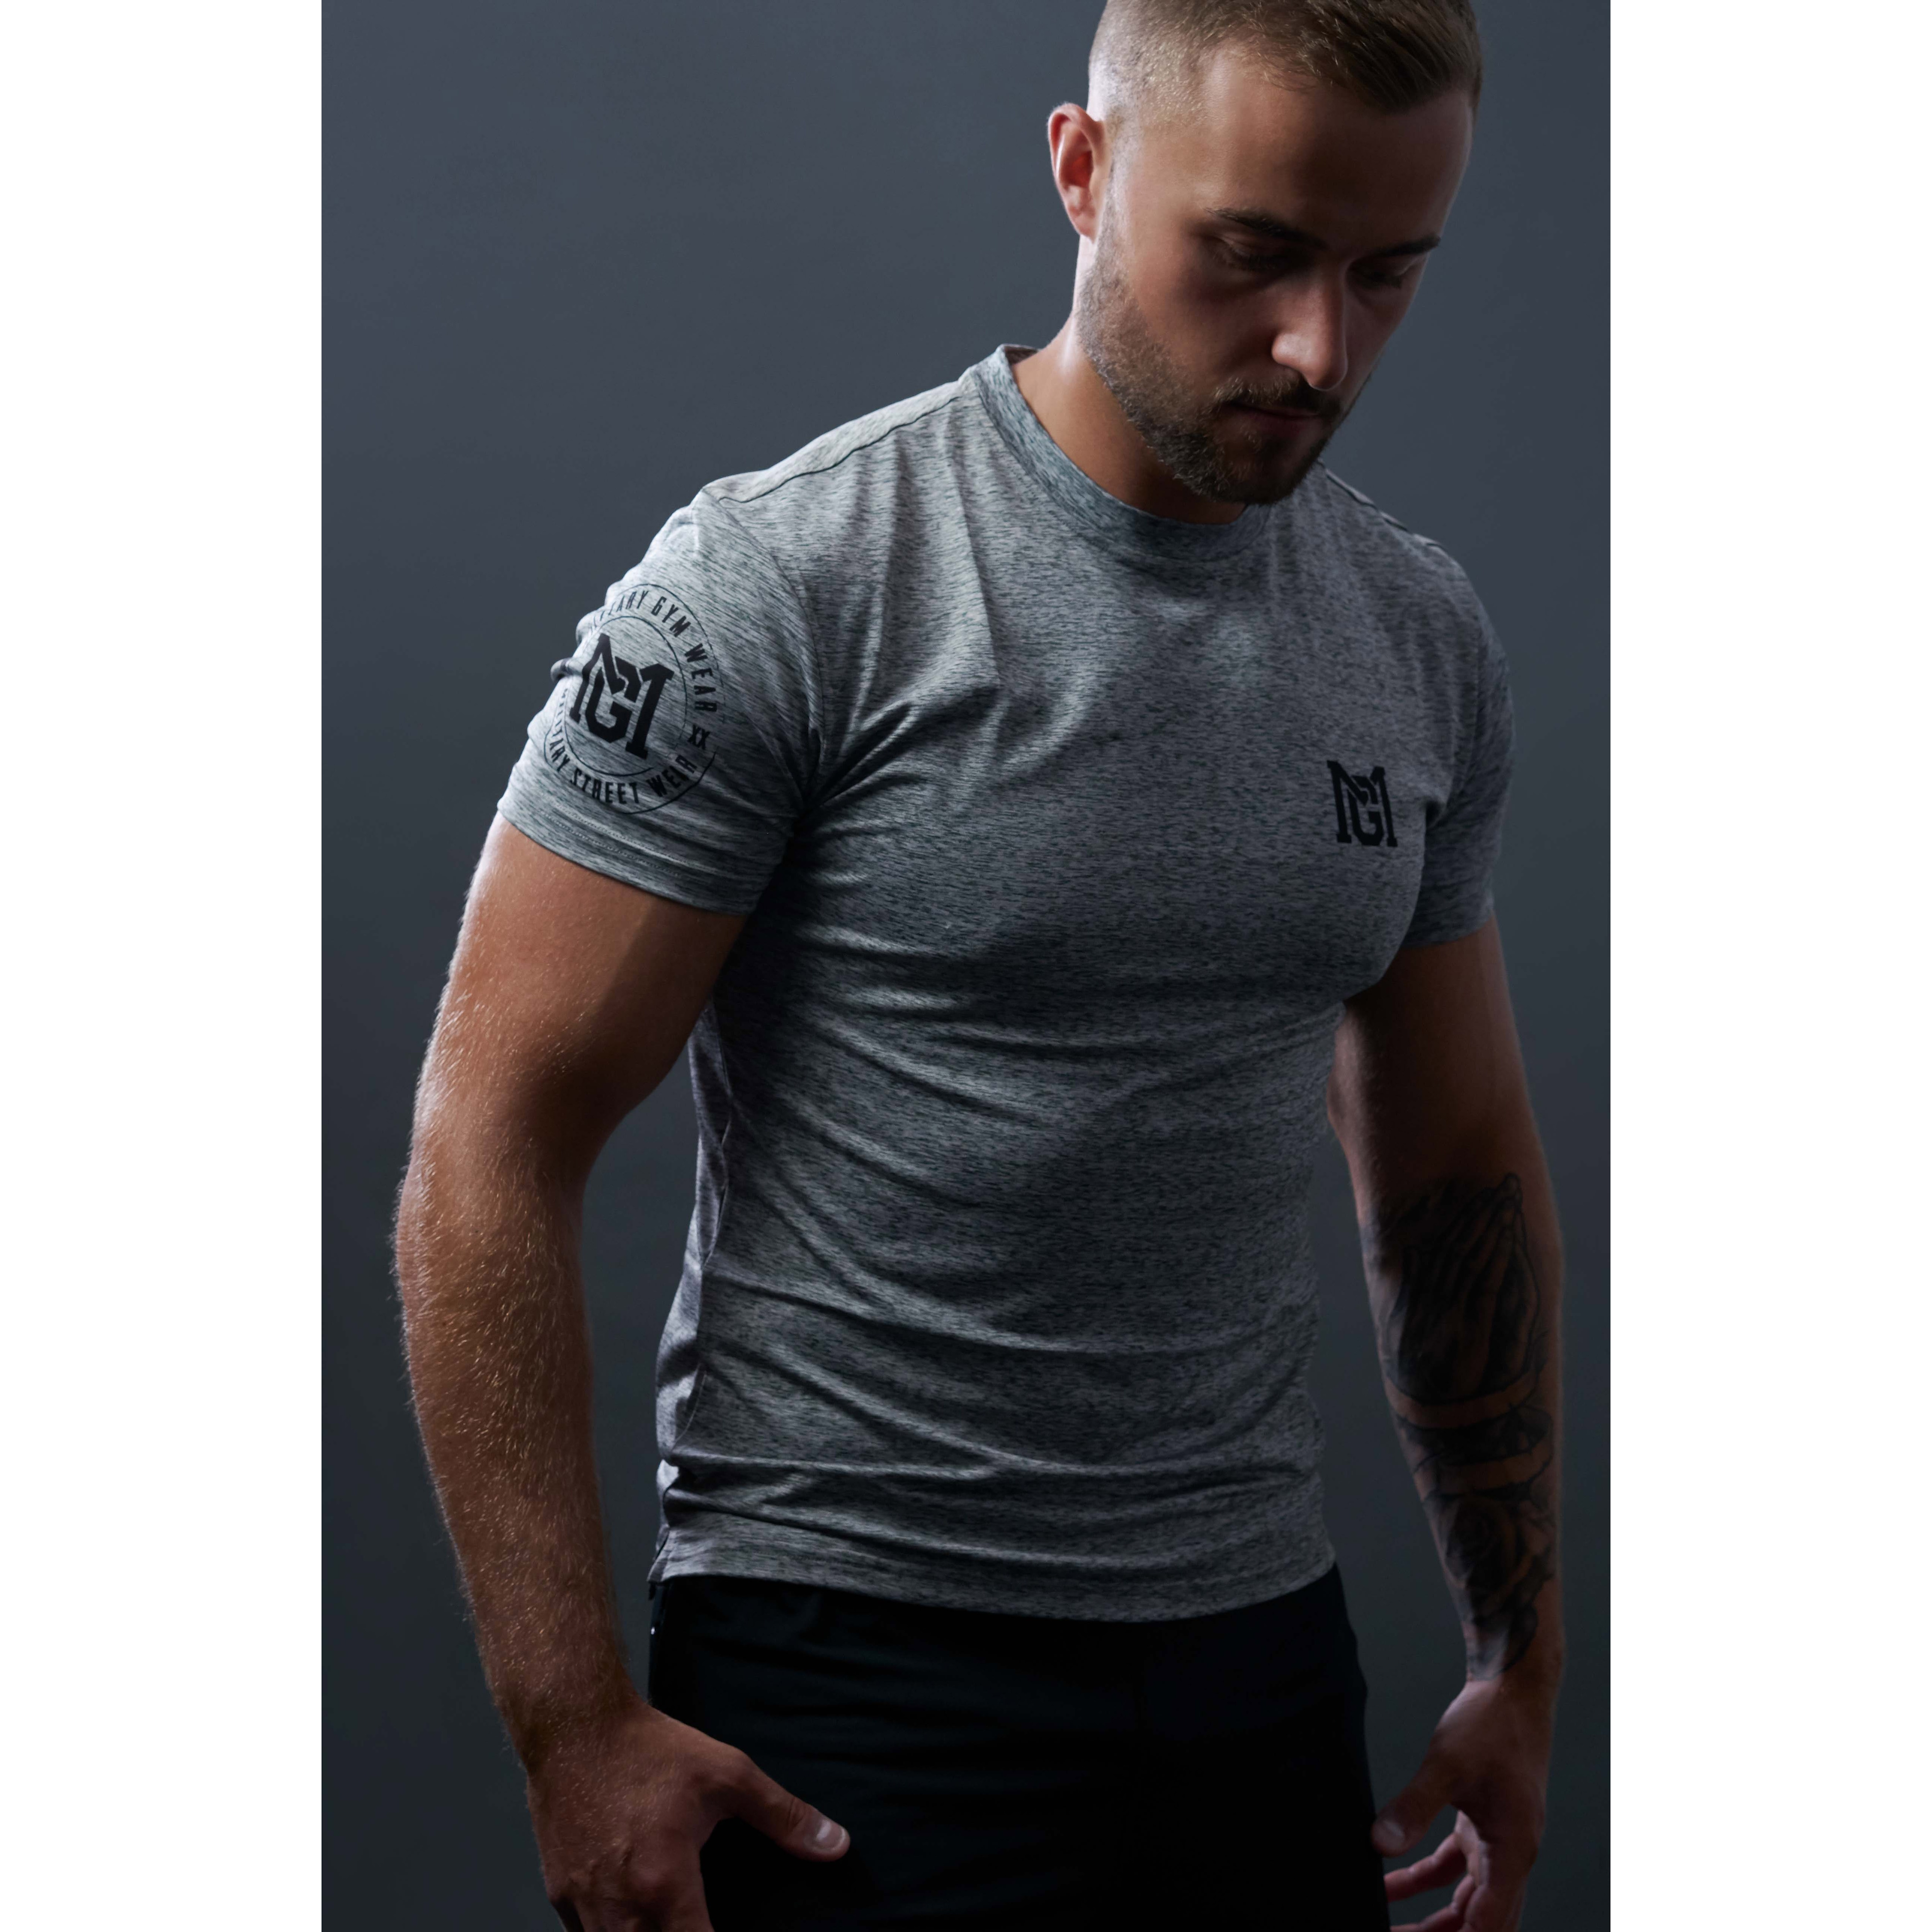 Військова тренувальна футболка Military Gym Wear Action Men Tee - сіра меланжева